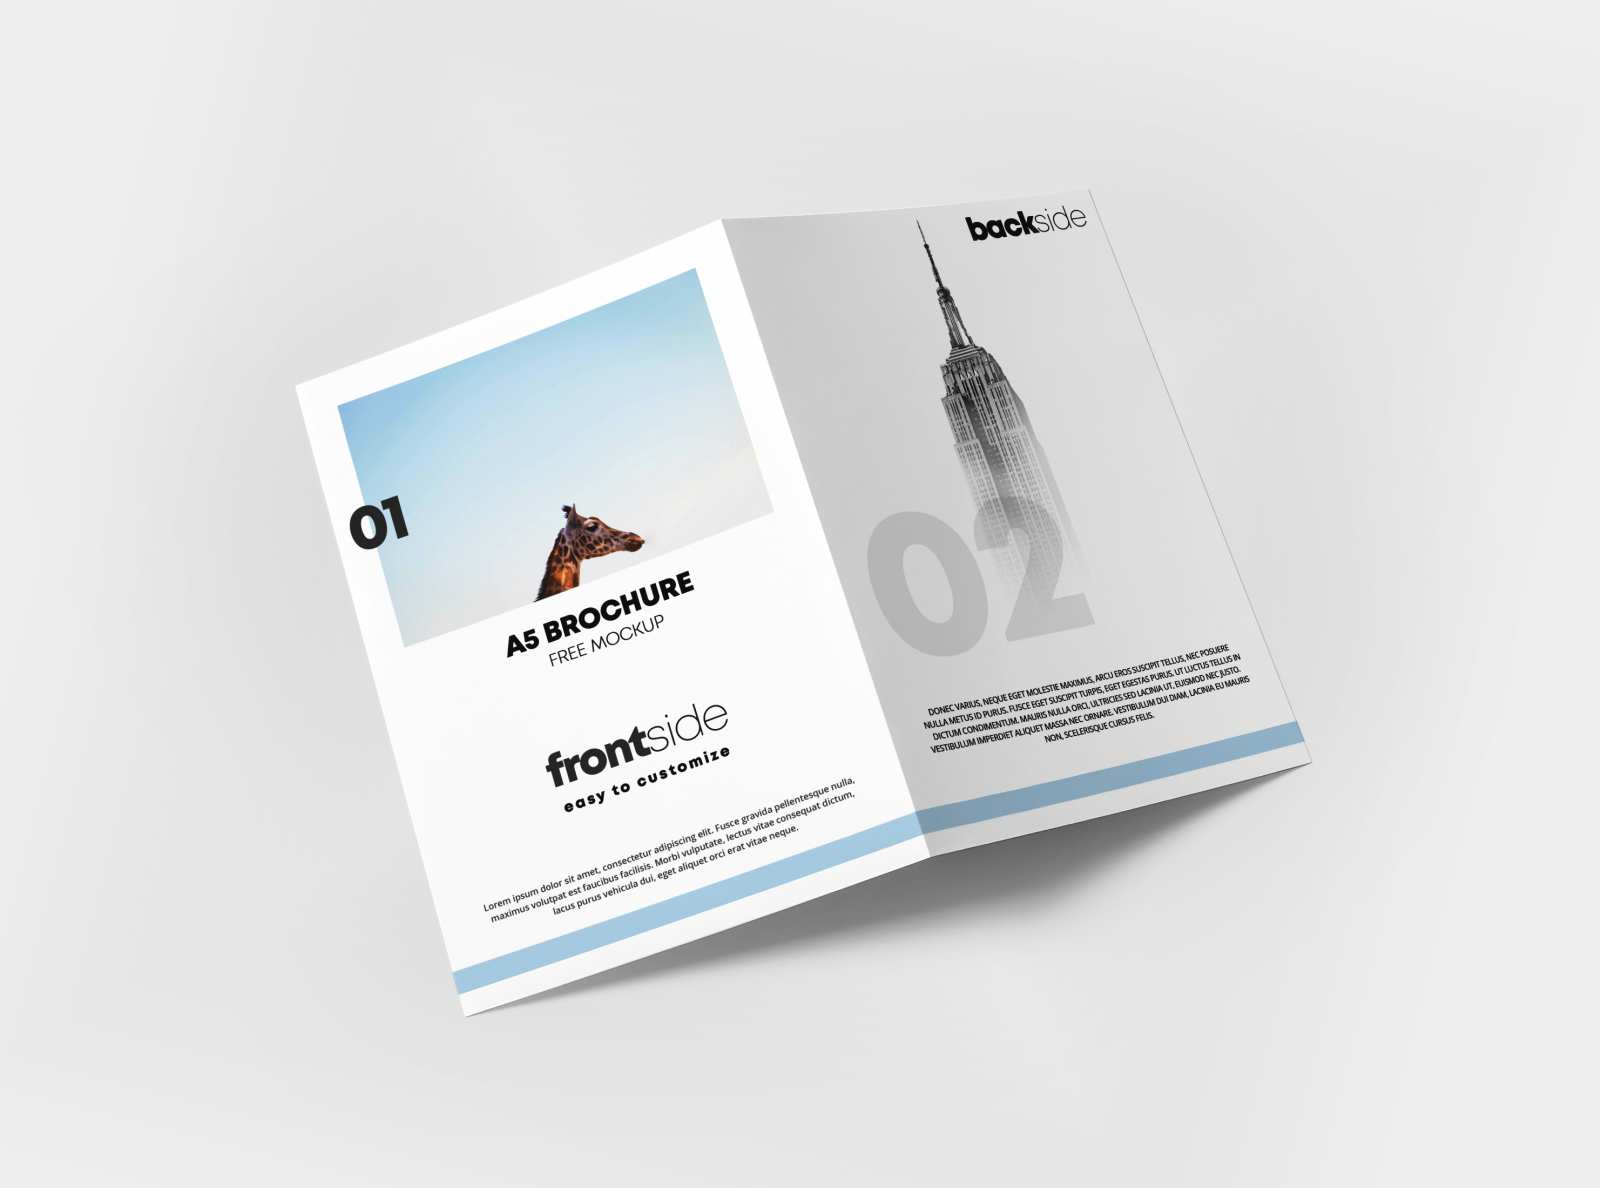 Download Free A5 Bi-Fold Brochure Cover Mockup by Pixelsdesign.net ...